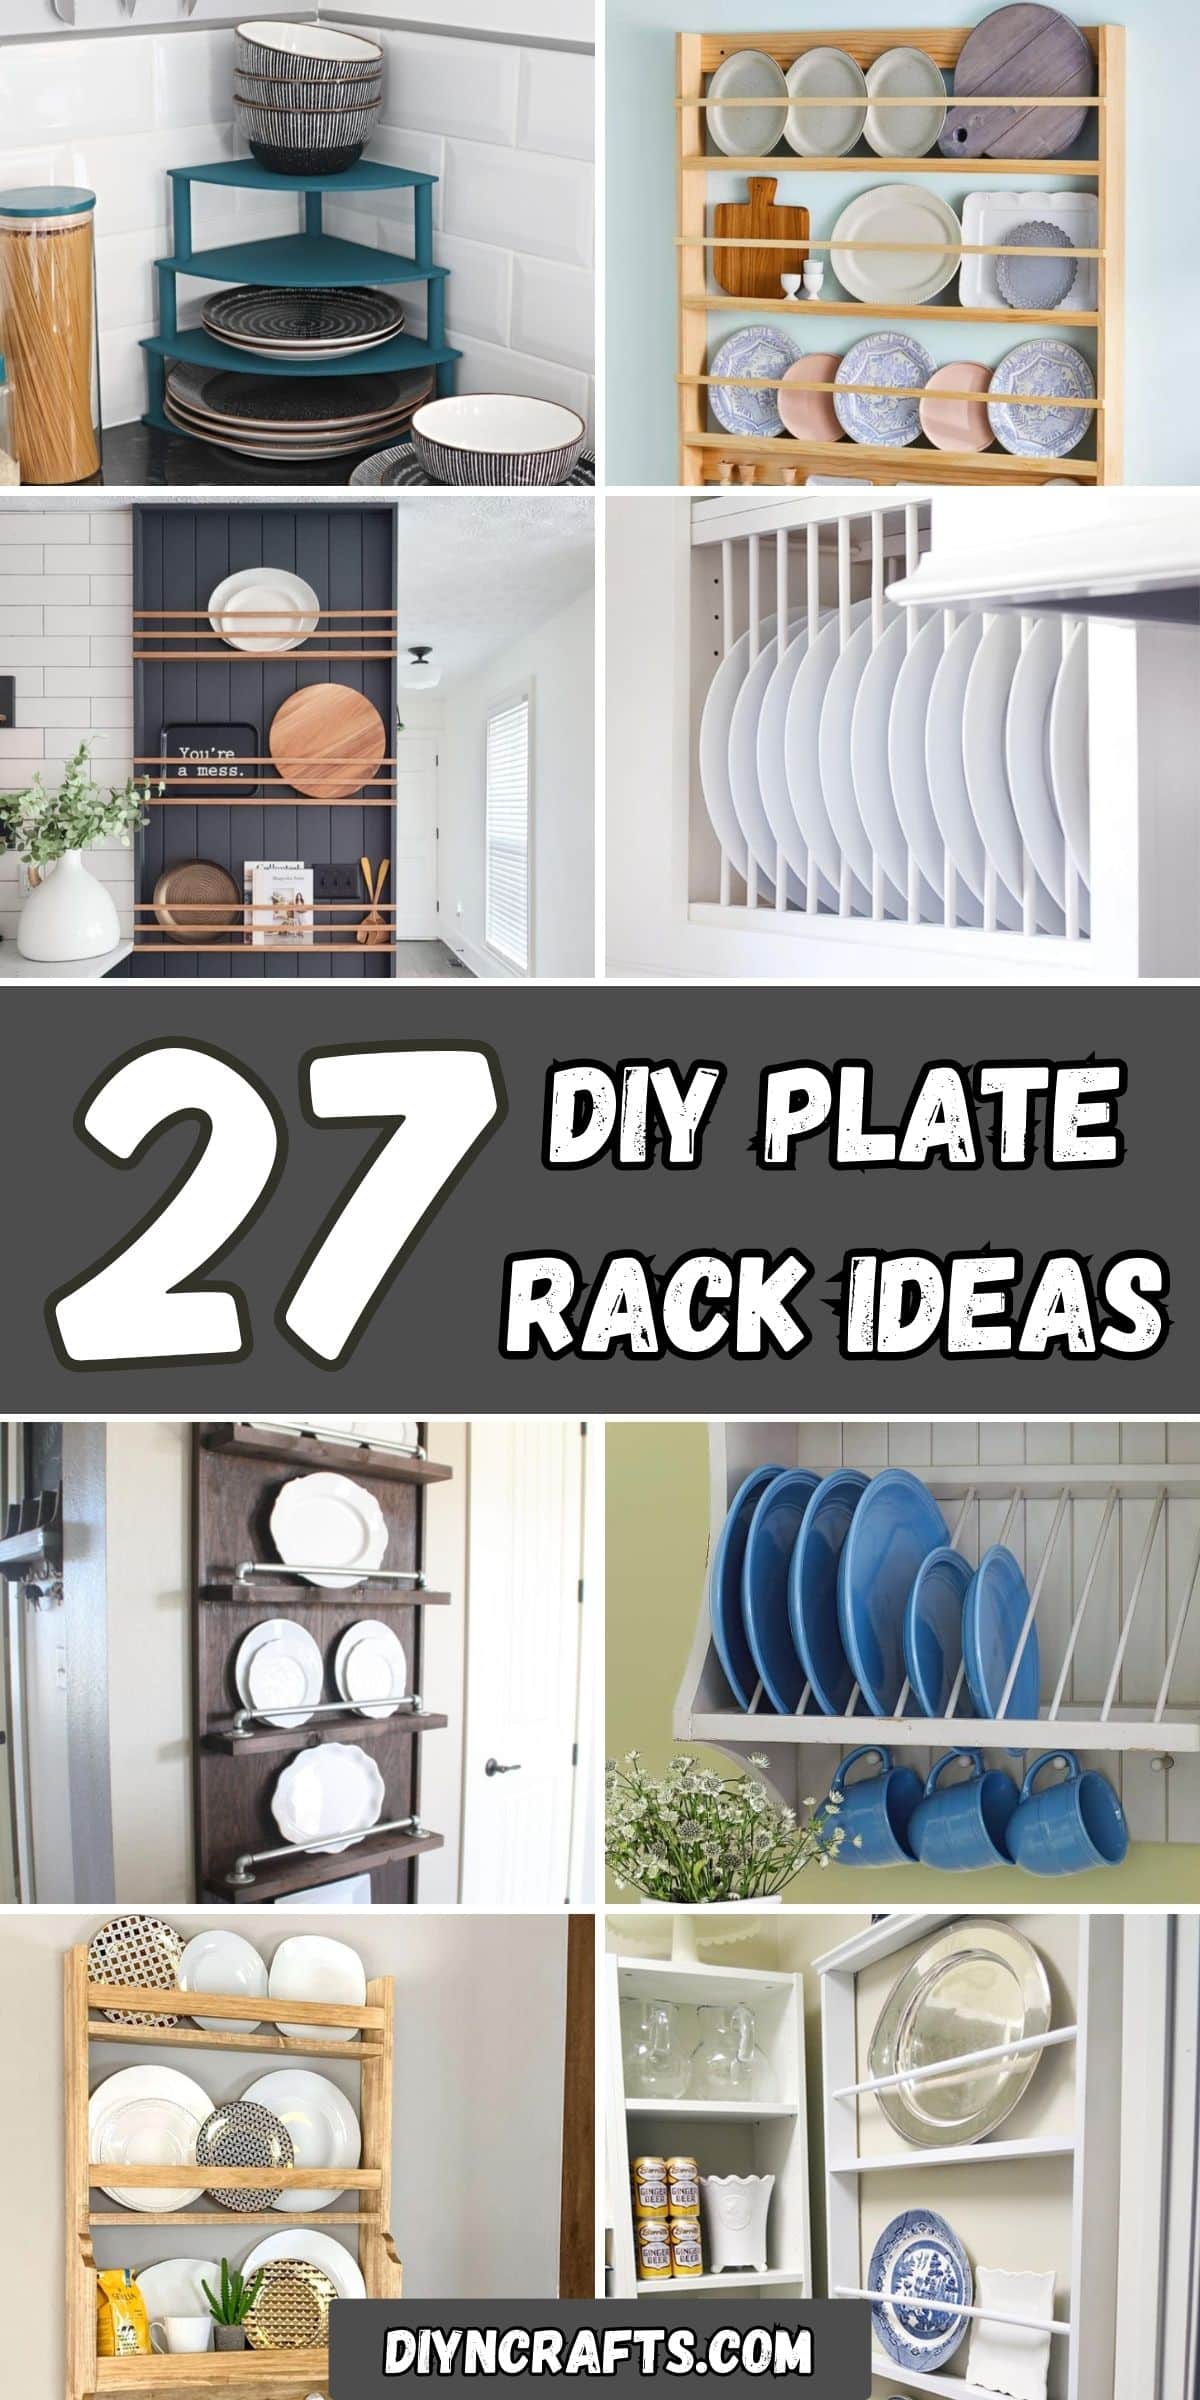 27 DIY Plate Rack Ideas collage.